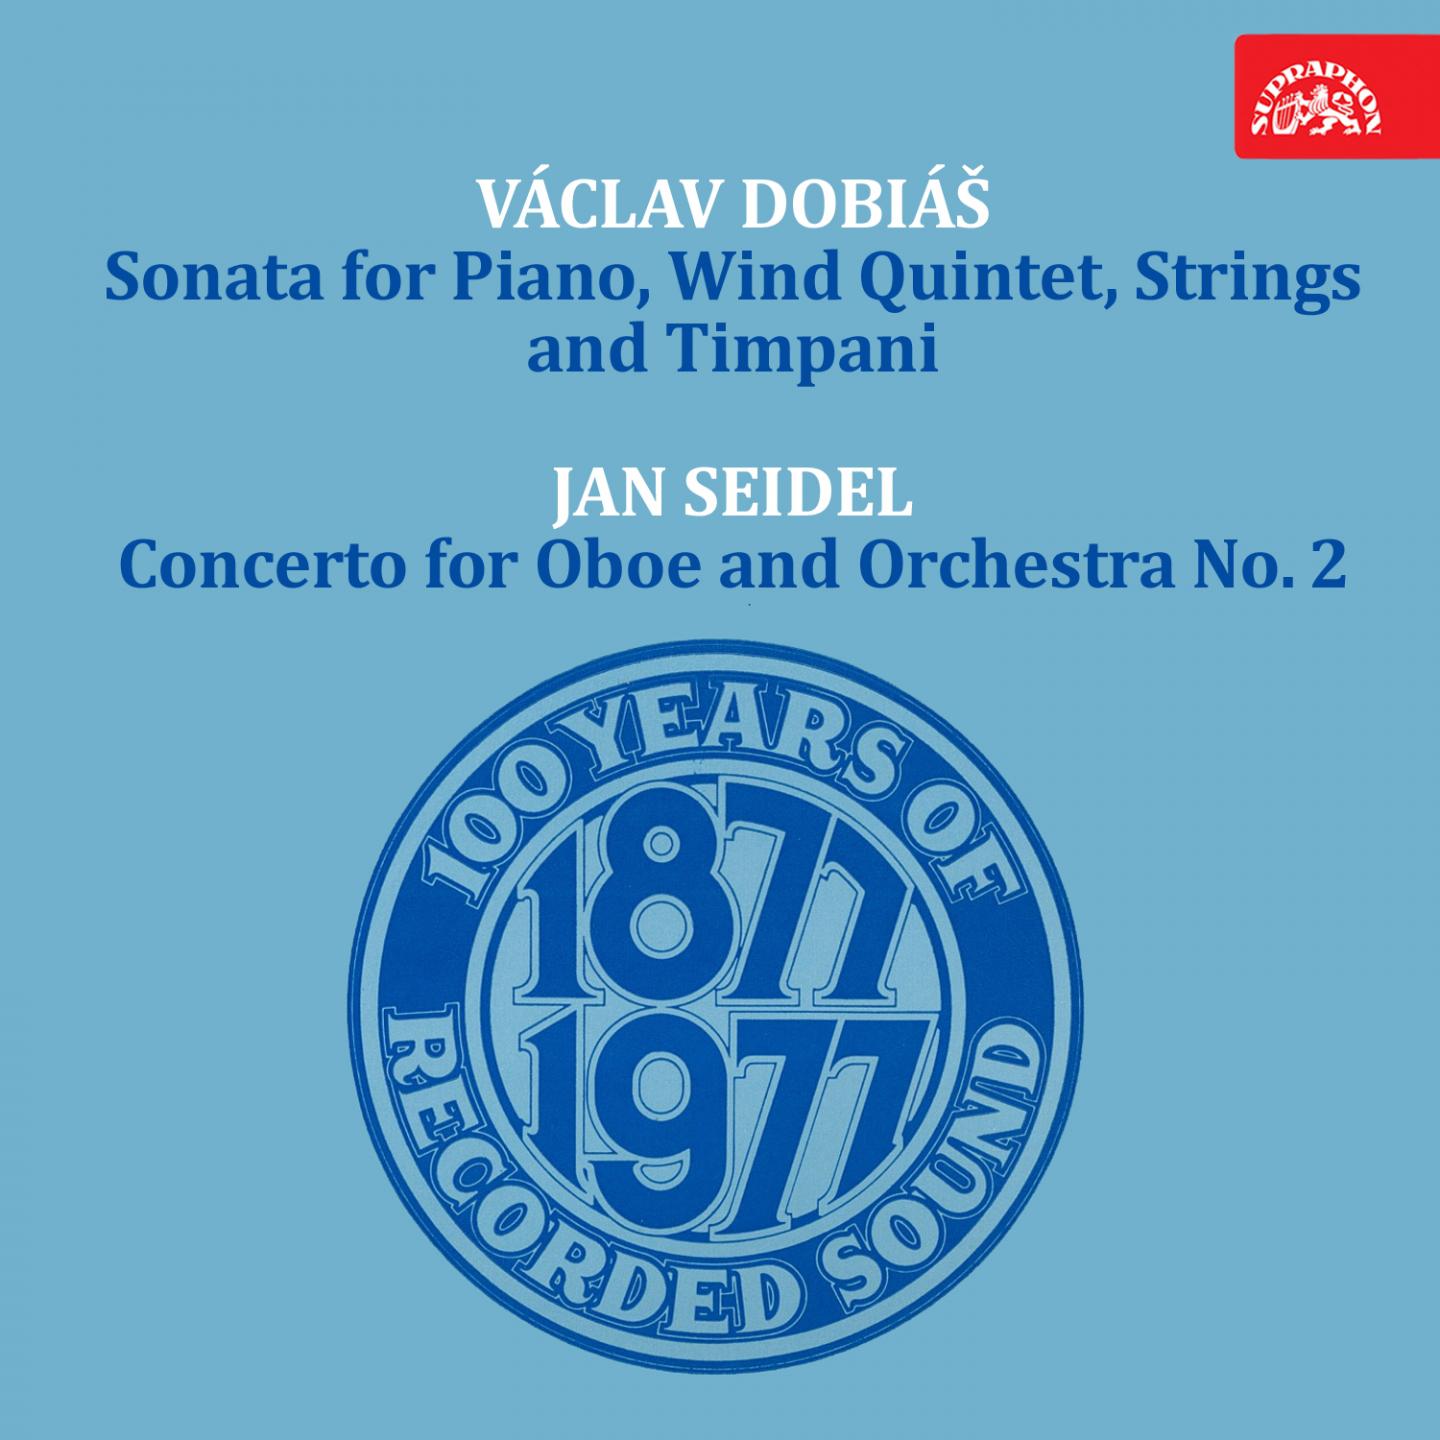 Sonata for Piano, Wind Quintet, Strings and Timpani